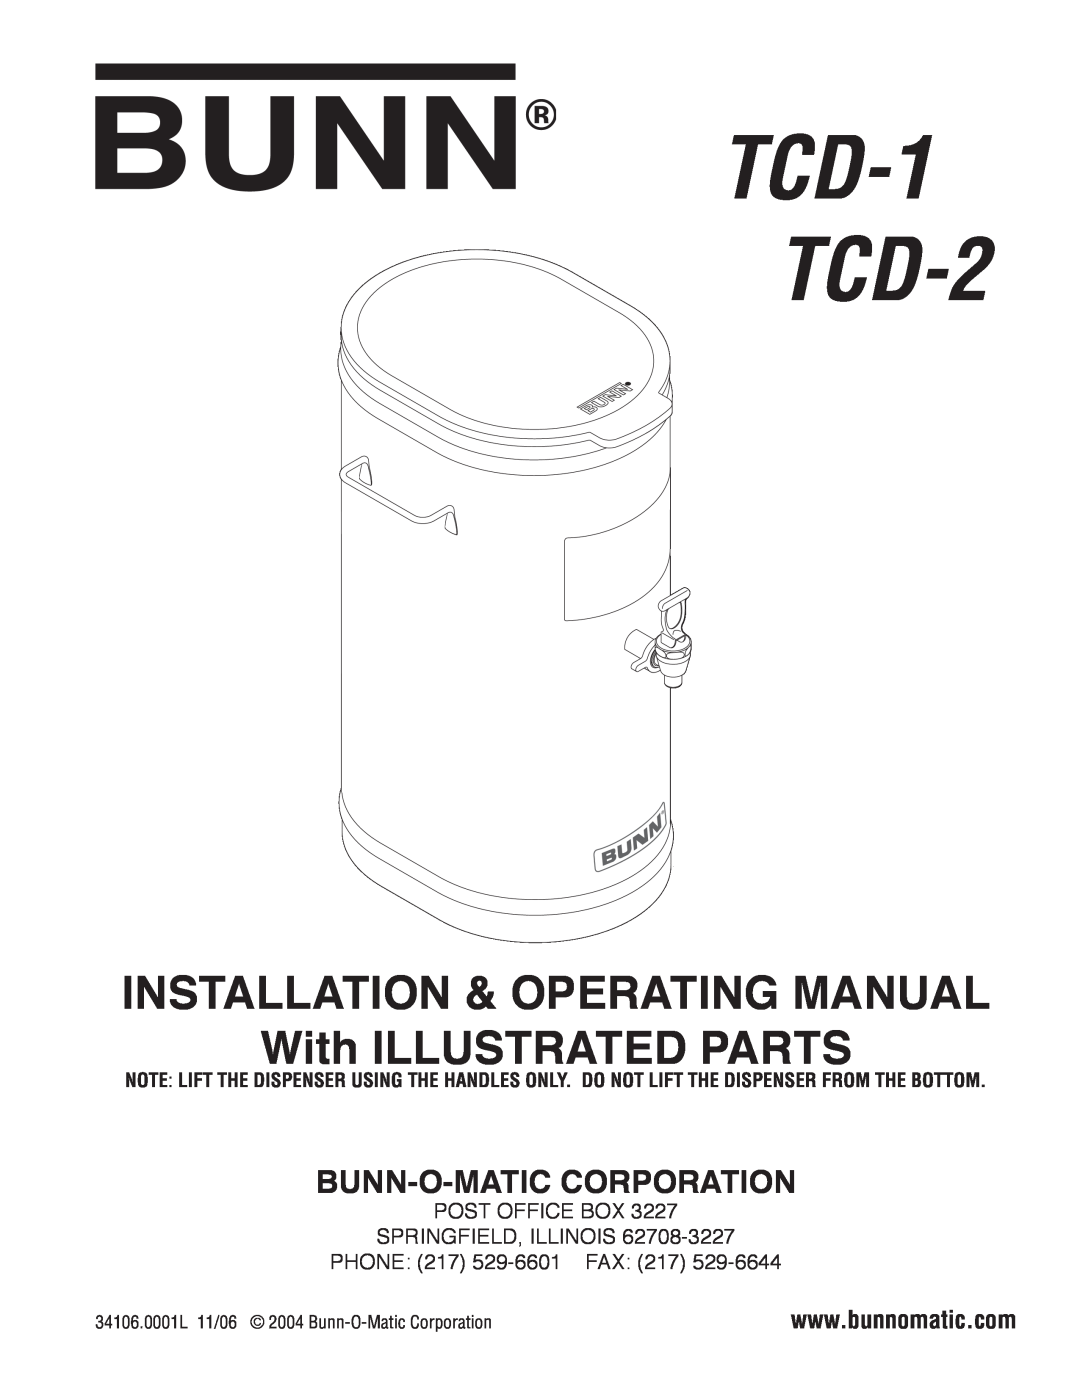 Bunn manual TCD-1 TCD-2, INSTALLATION & OPERATING MANUAL With ILLUSTRATED PARTS, Bunn-O-Matic Corporation 